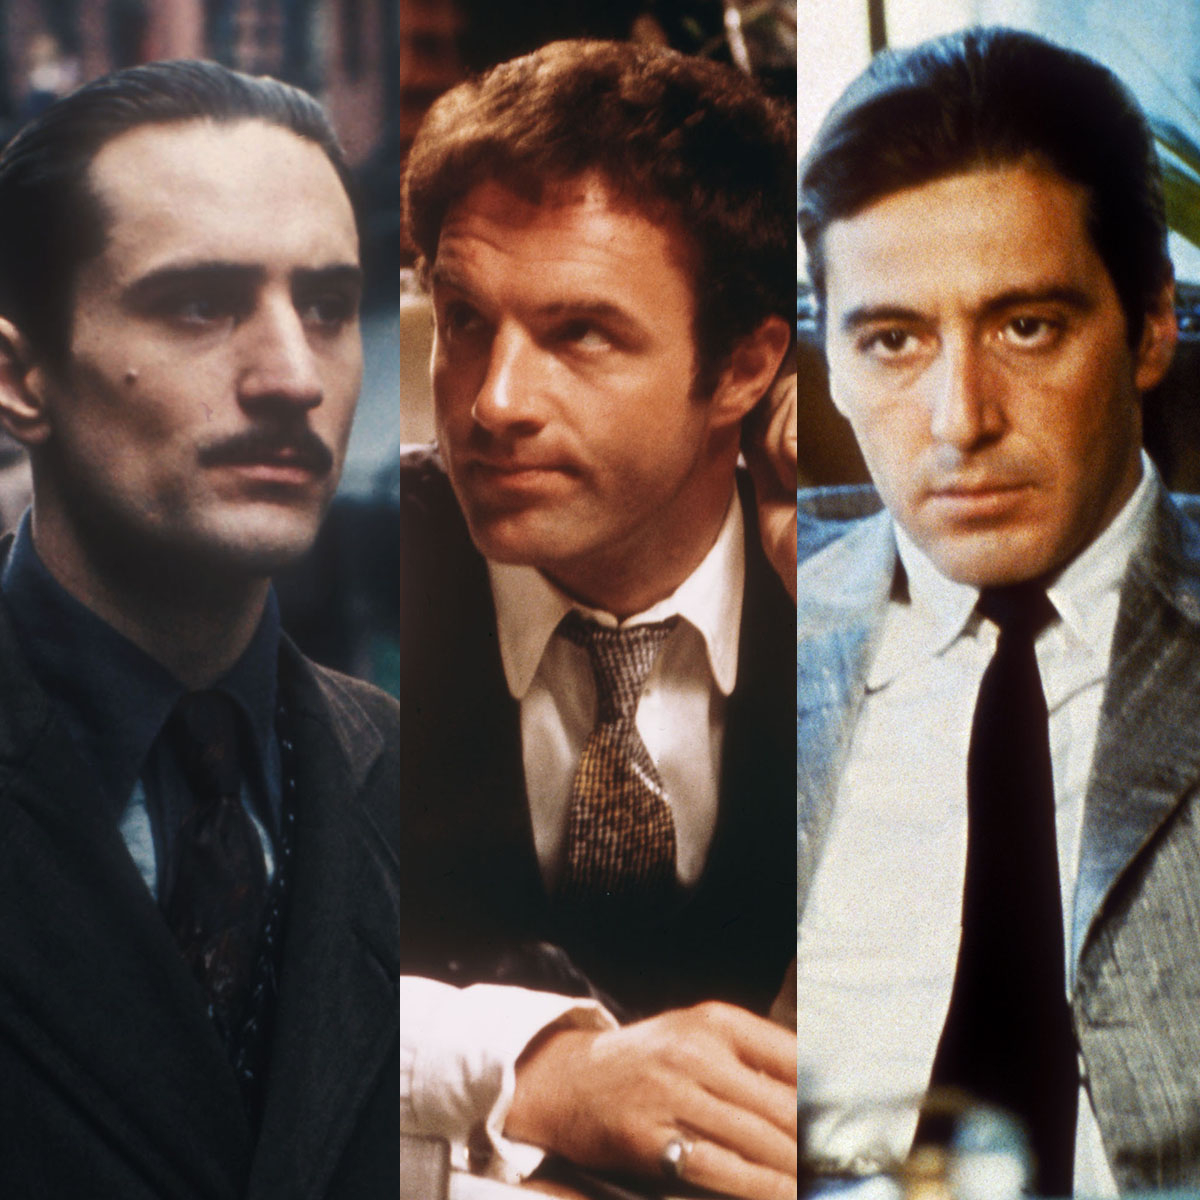 James Caan'S Co-Stars Al Pacino And Robert De Niro Pay Tribute - E! Online